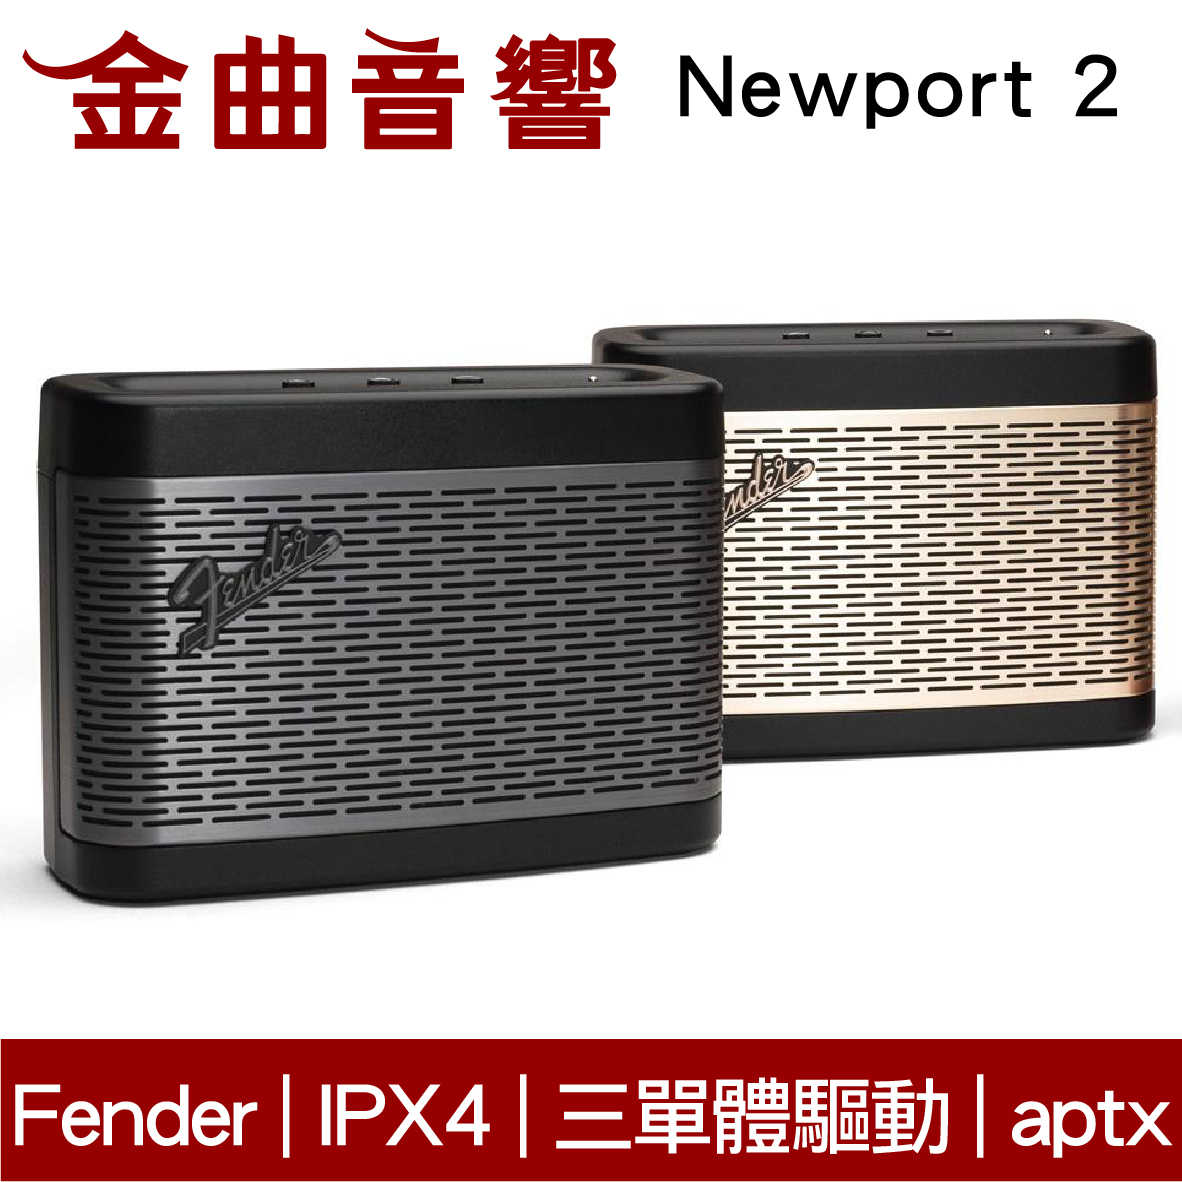 Fender Newport 2 二代升級 無線 充電式 可攜帶 藍牙喇叭 | 金曲音響